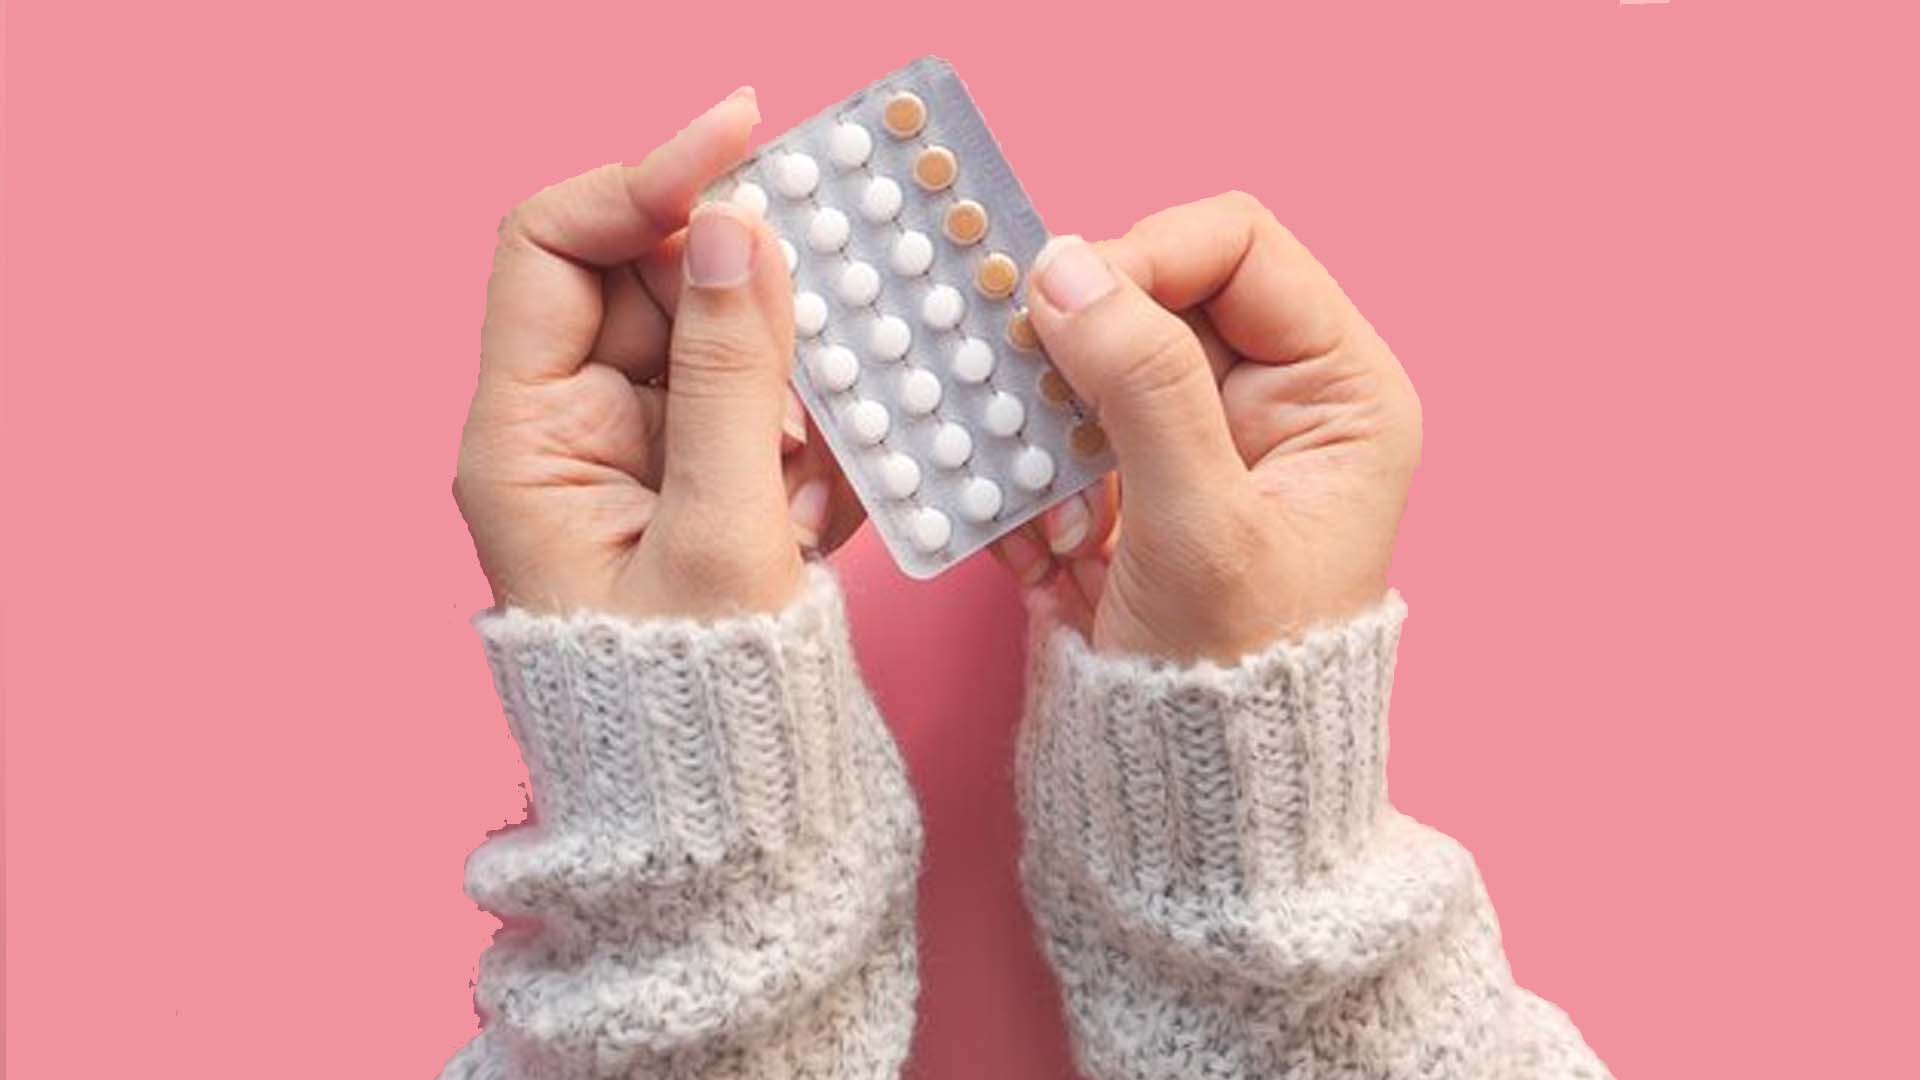 Holding Birth Control Pills (contraceptive pills)